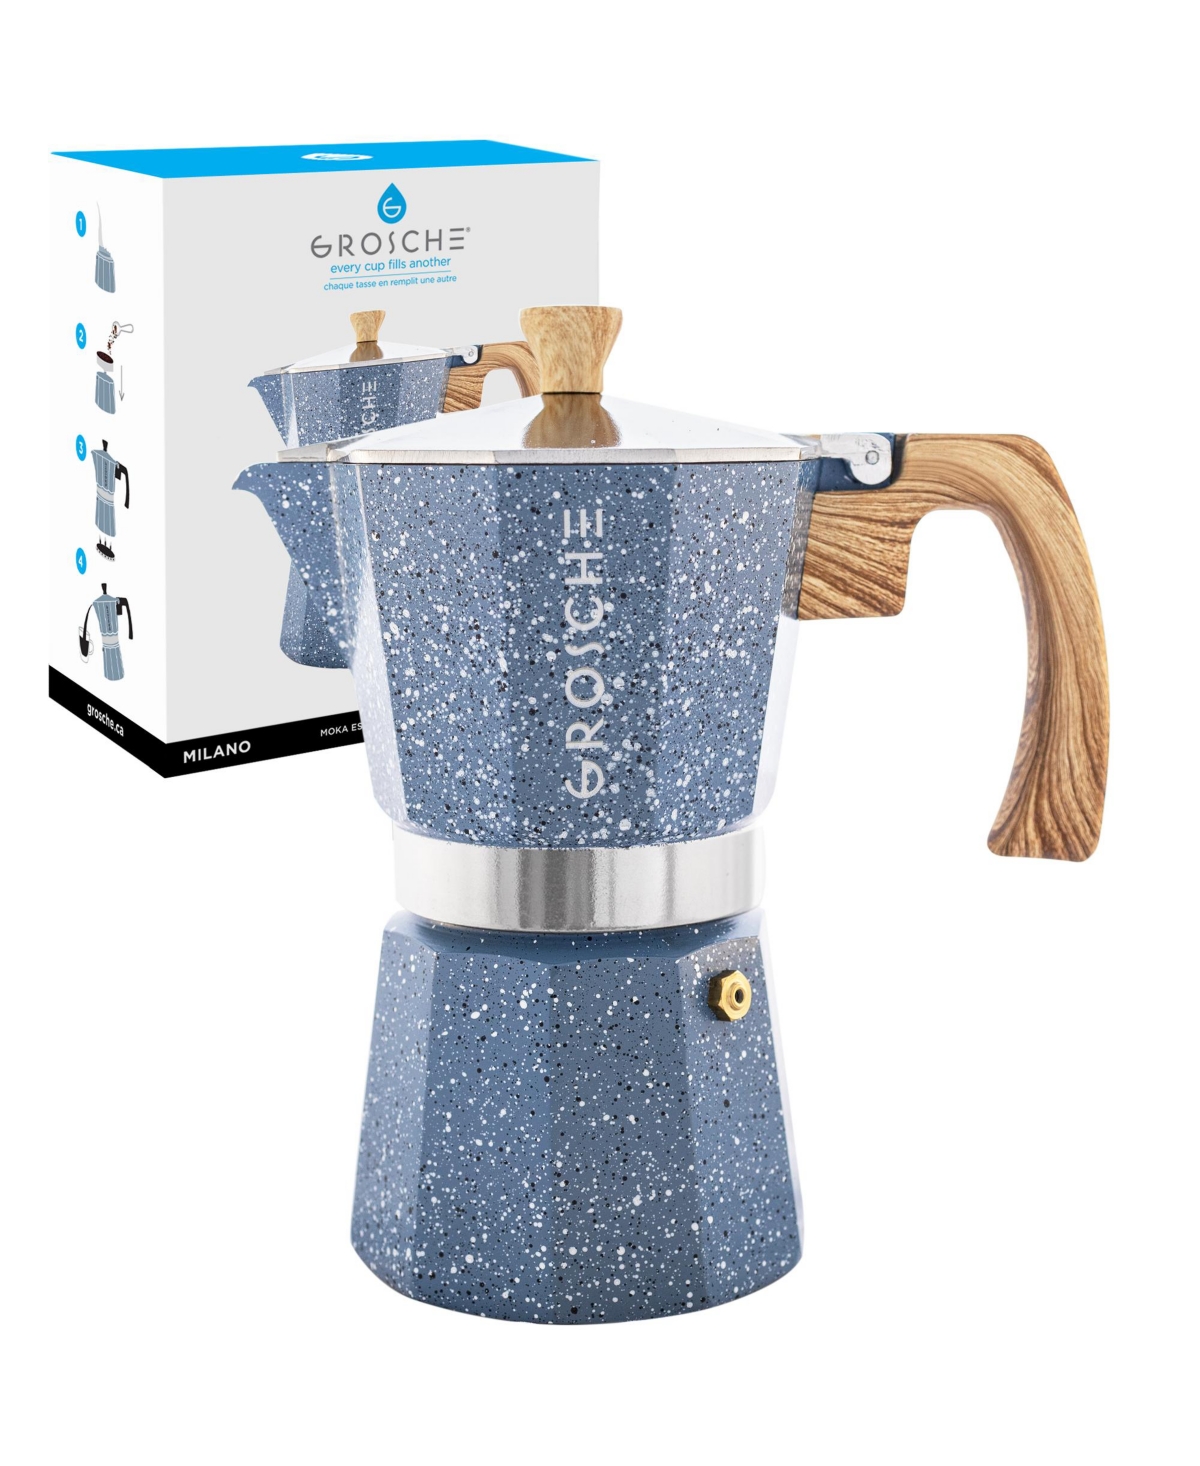 Grosche Milano Stone Stovetop Espresso Maker Moka Pot 9 Cup, 15.2 oz In Indigo Blue